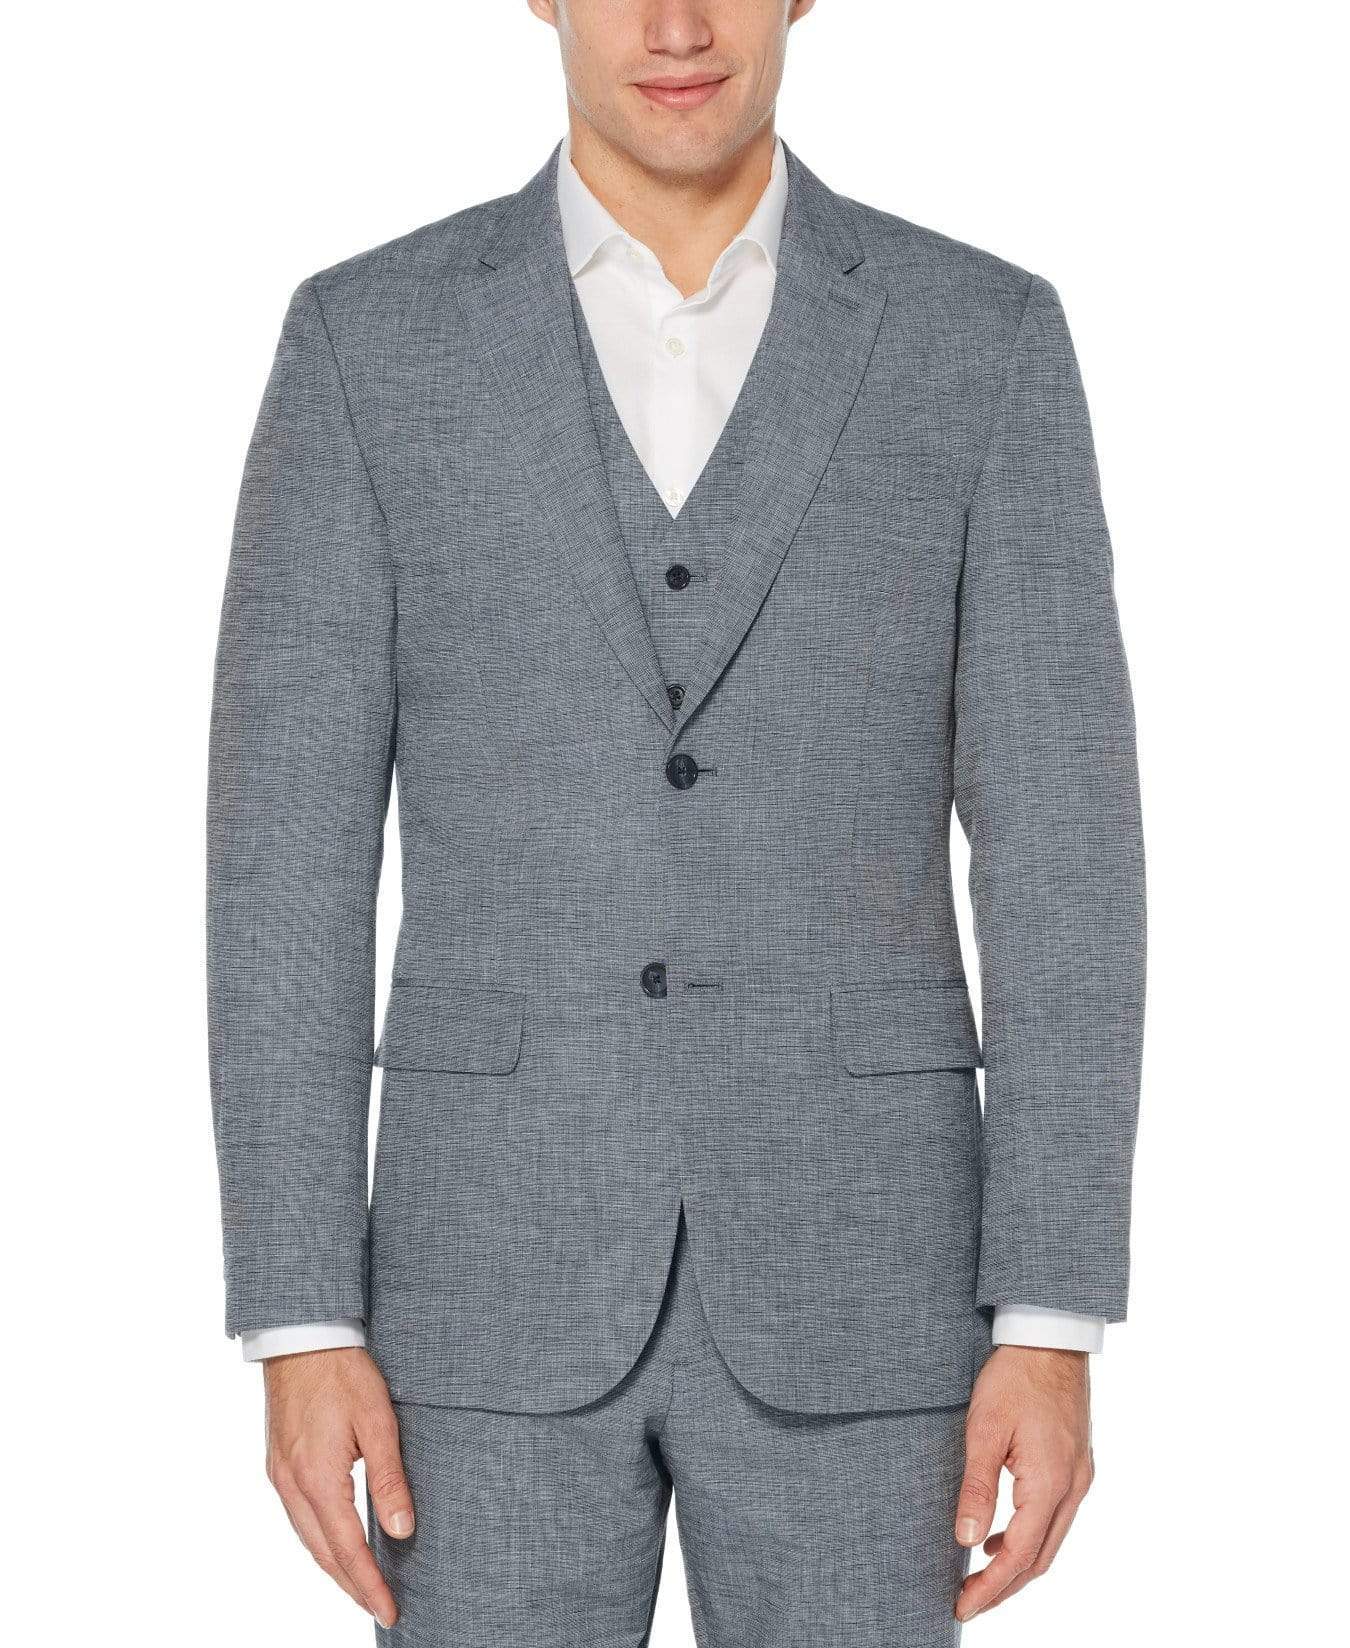 Slim Fit Heathered Linen Suit Jacket